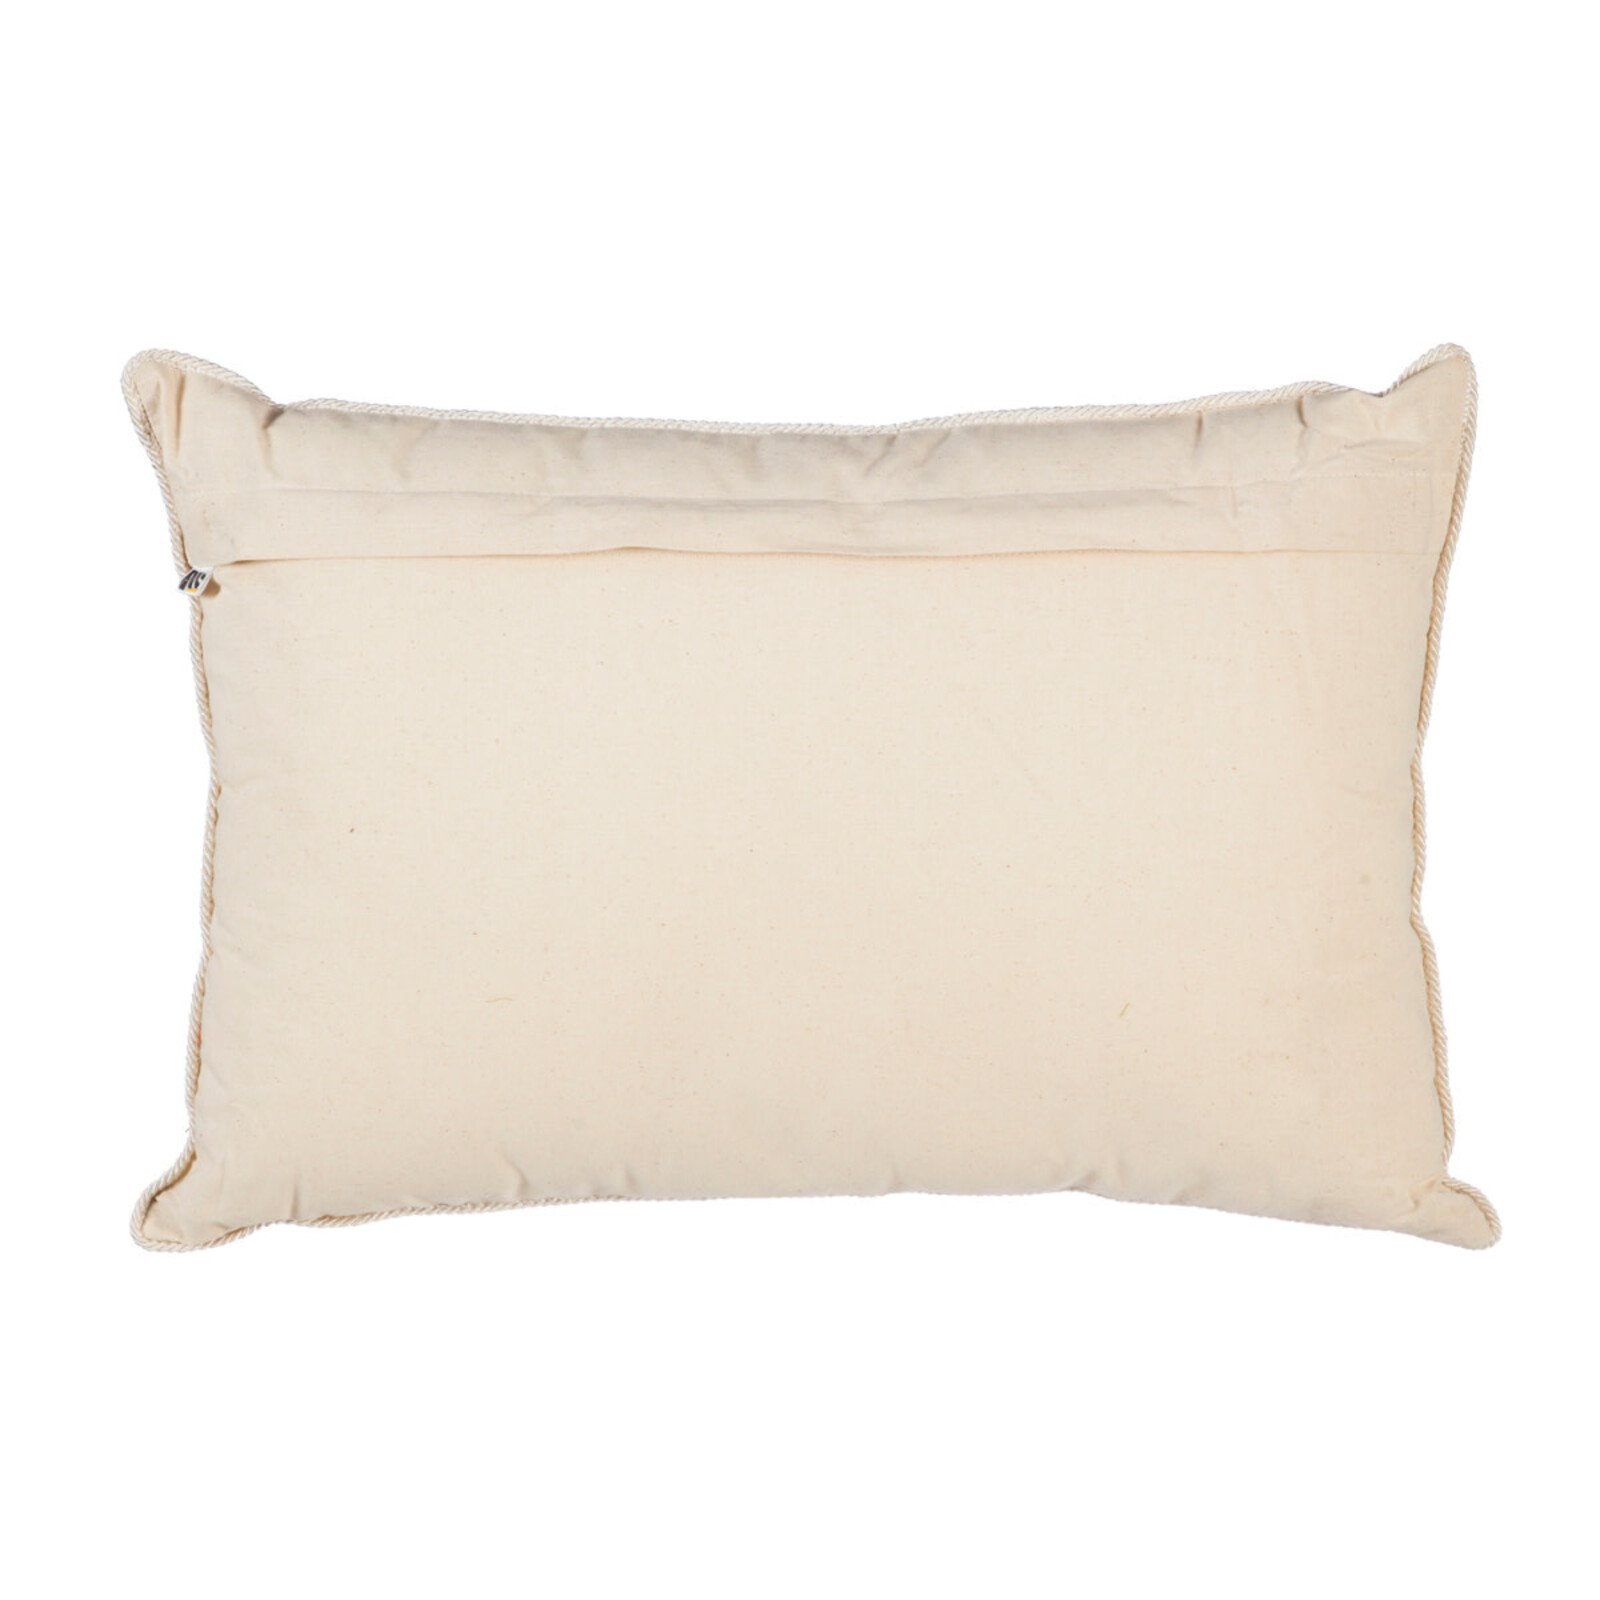 Evergreen Enterprises White/ Blue Stripes Lumbar Pillow with Car, "Enjoy The Journey" 4P7001 loading=